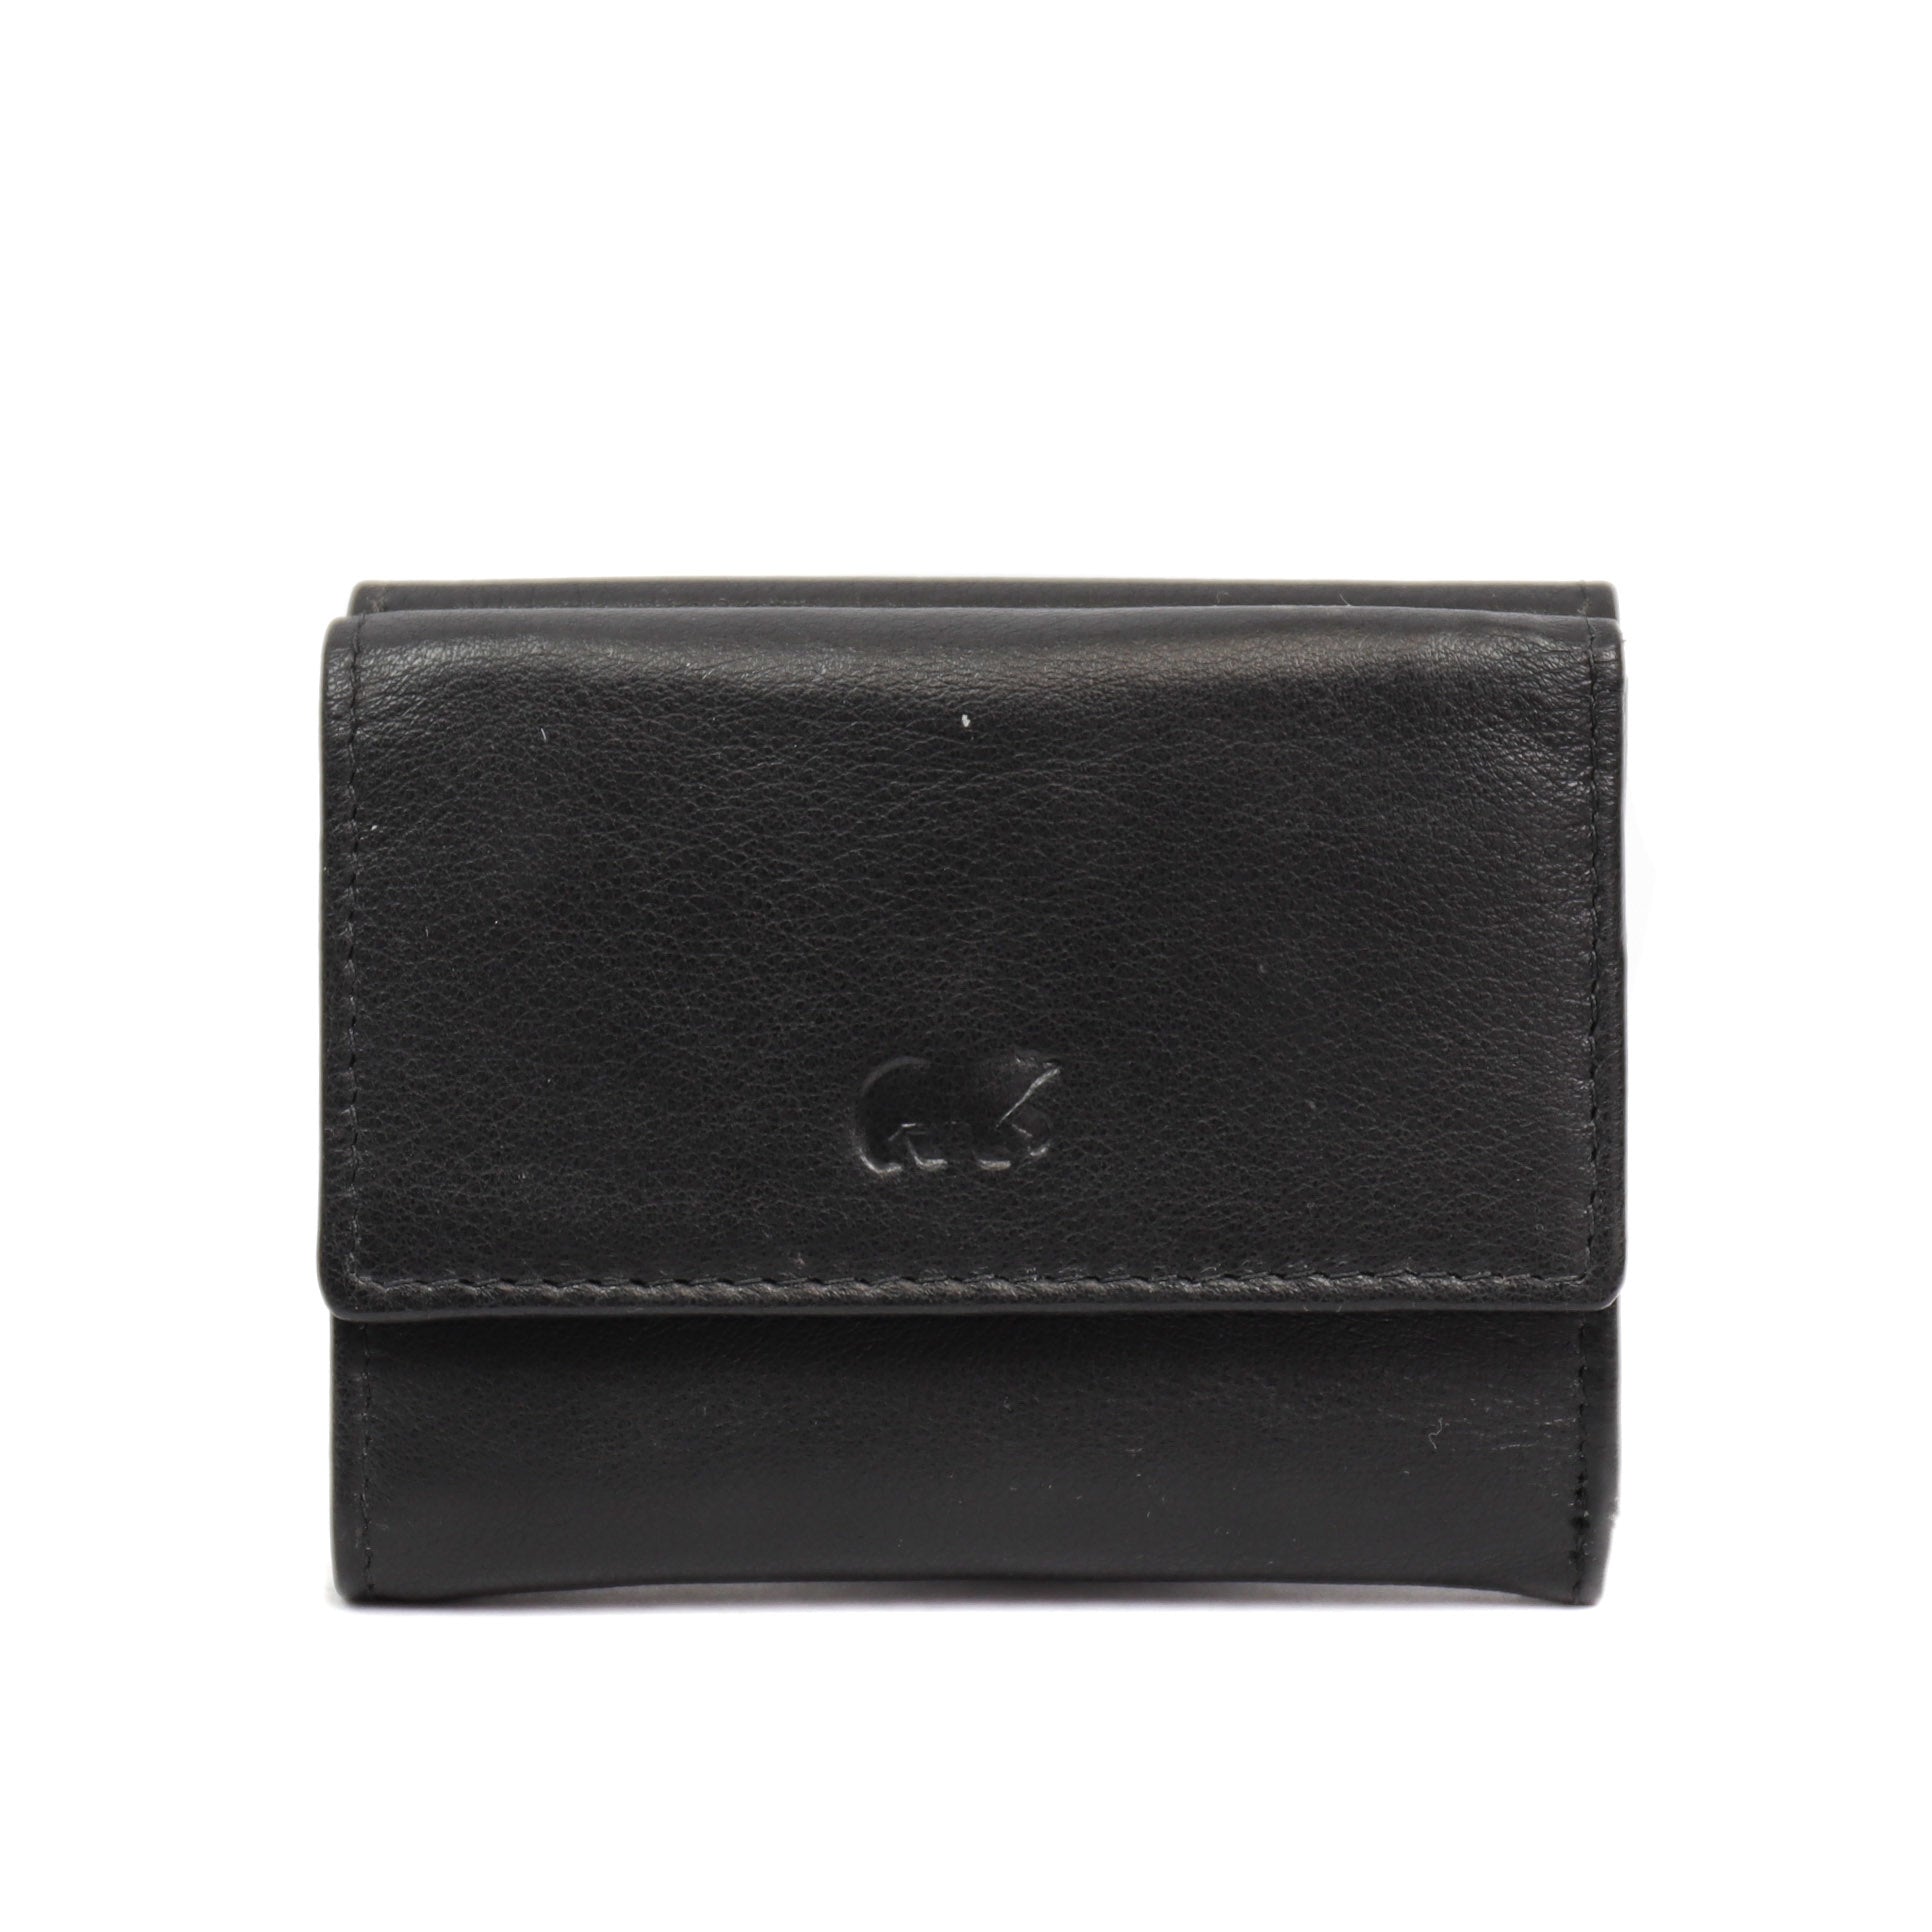 Wallet 'Jolie' black - FR 8460